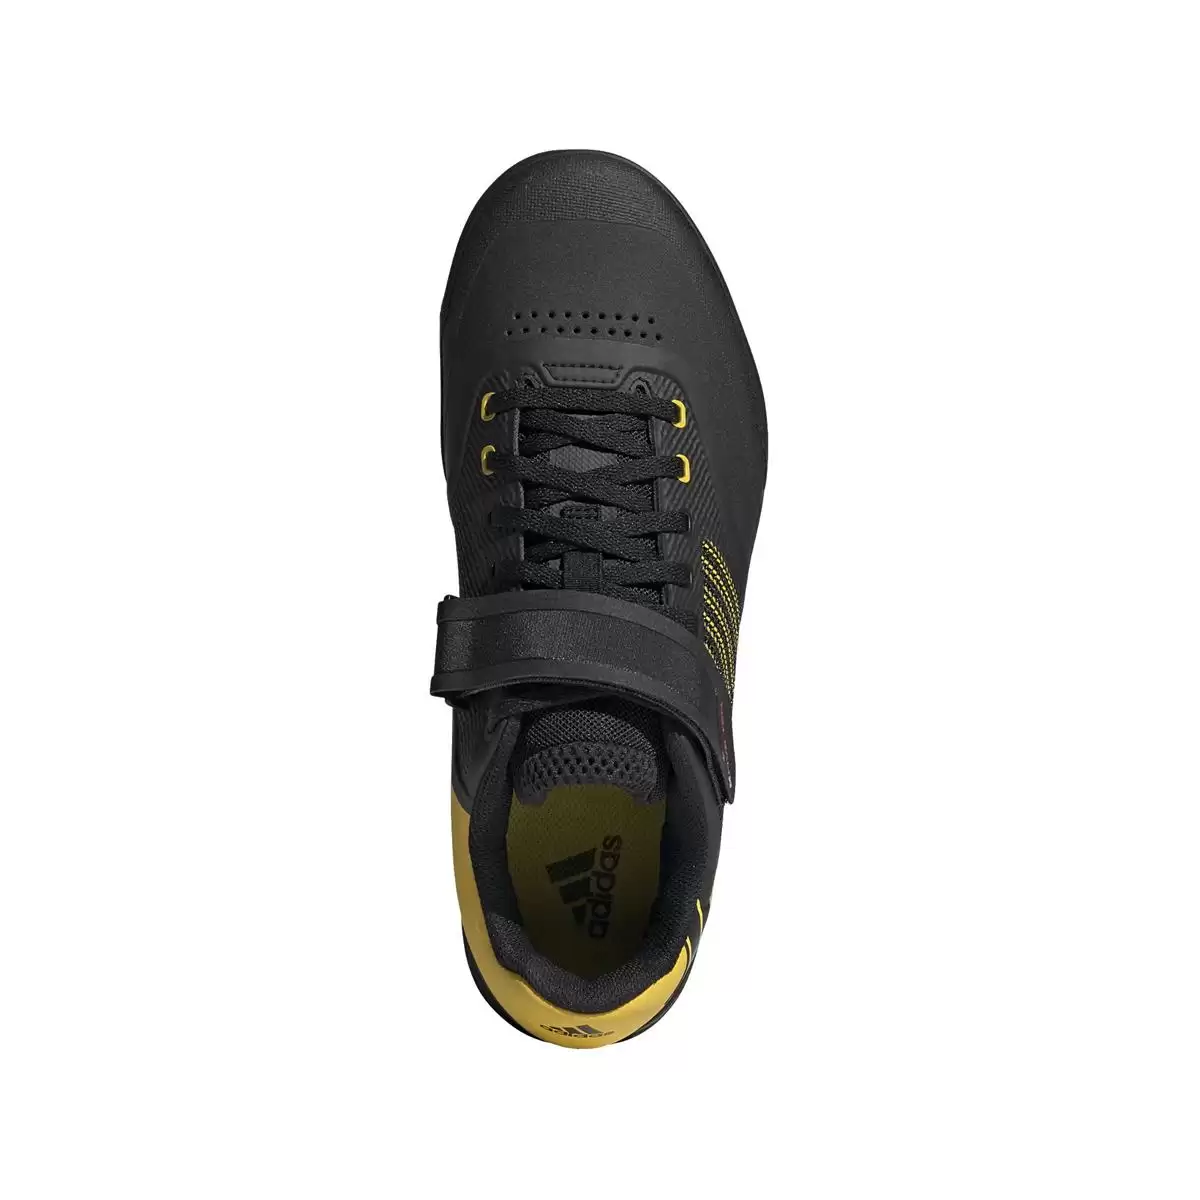 MTB Shoes Hellcat Pro Black/Yellow Size 45 #4